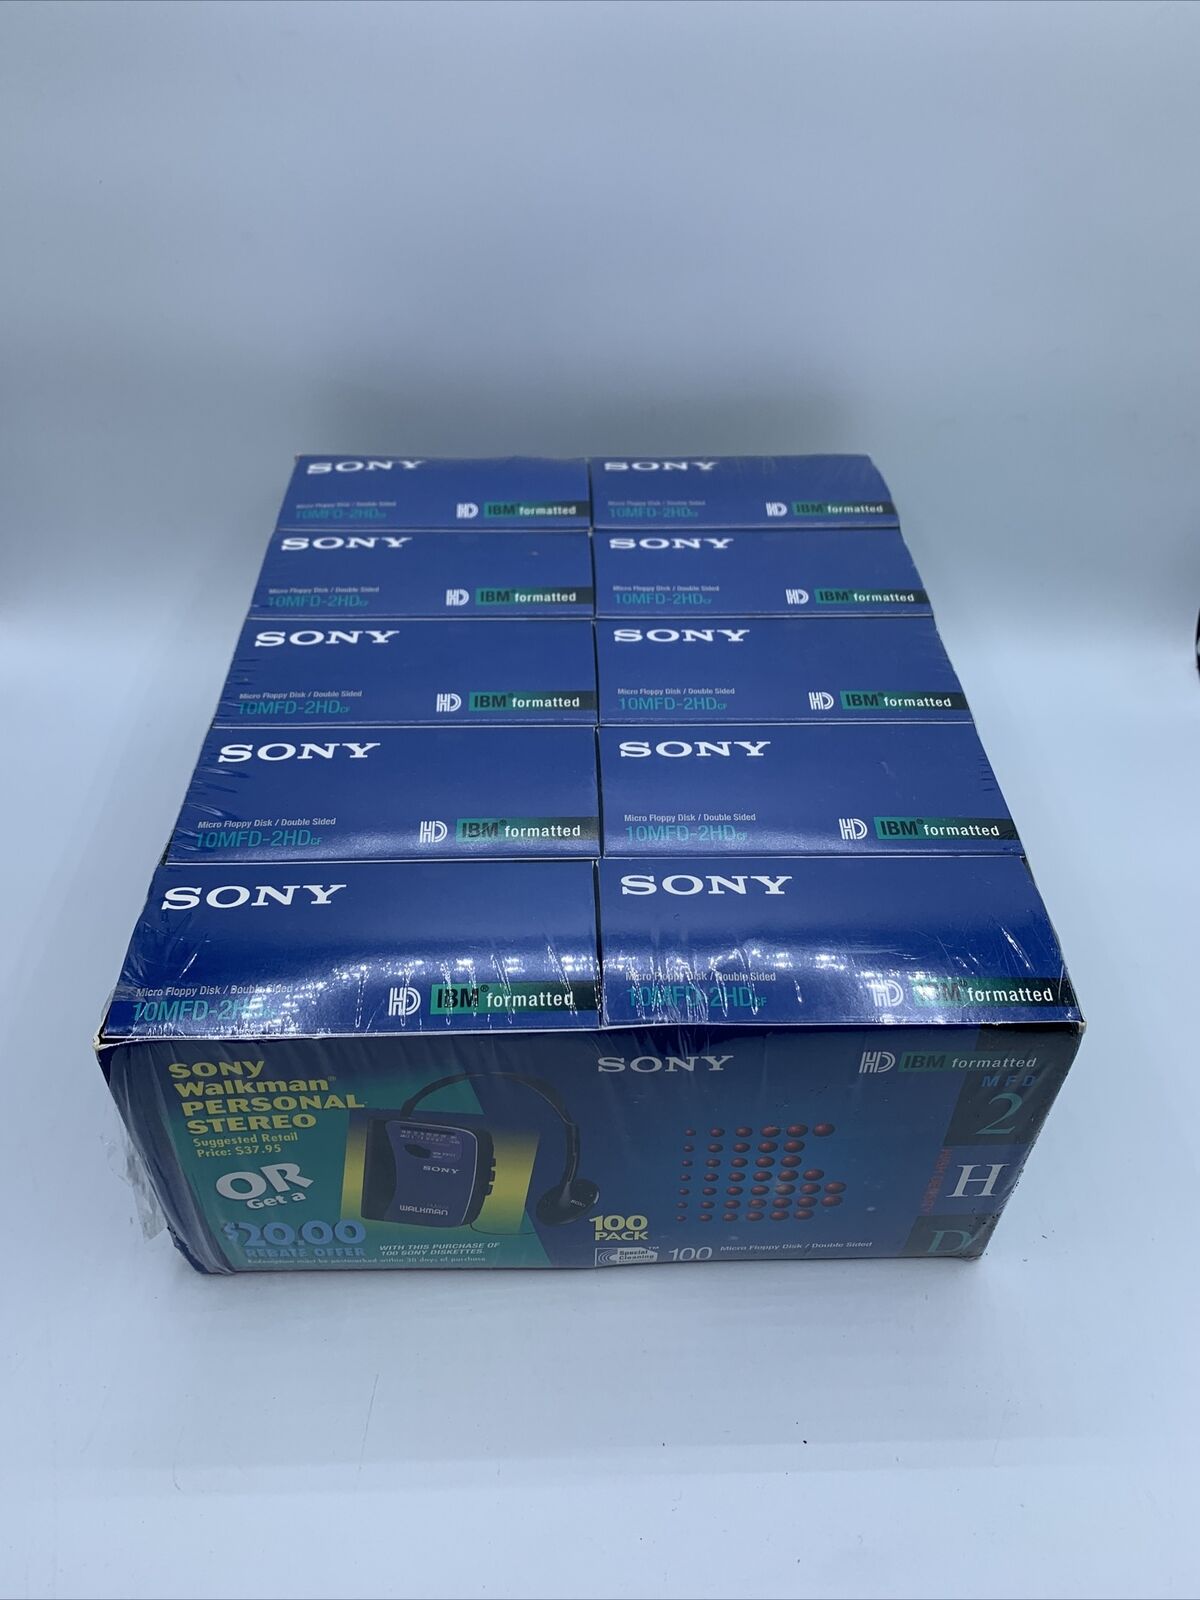 Sony 3.5